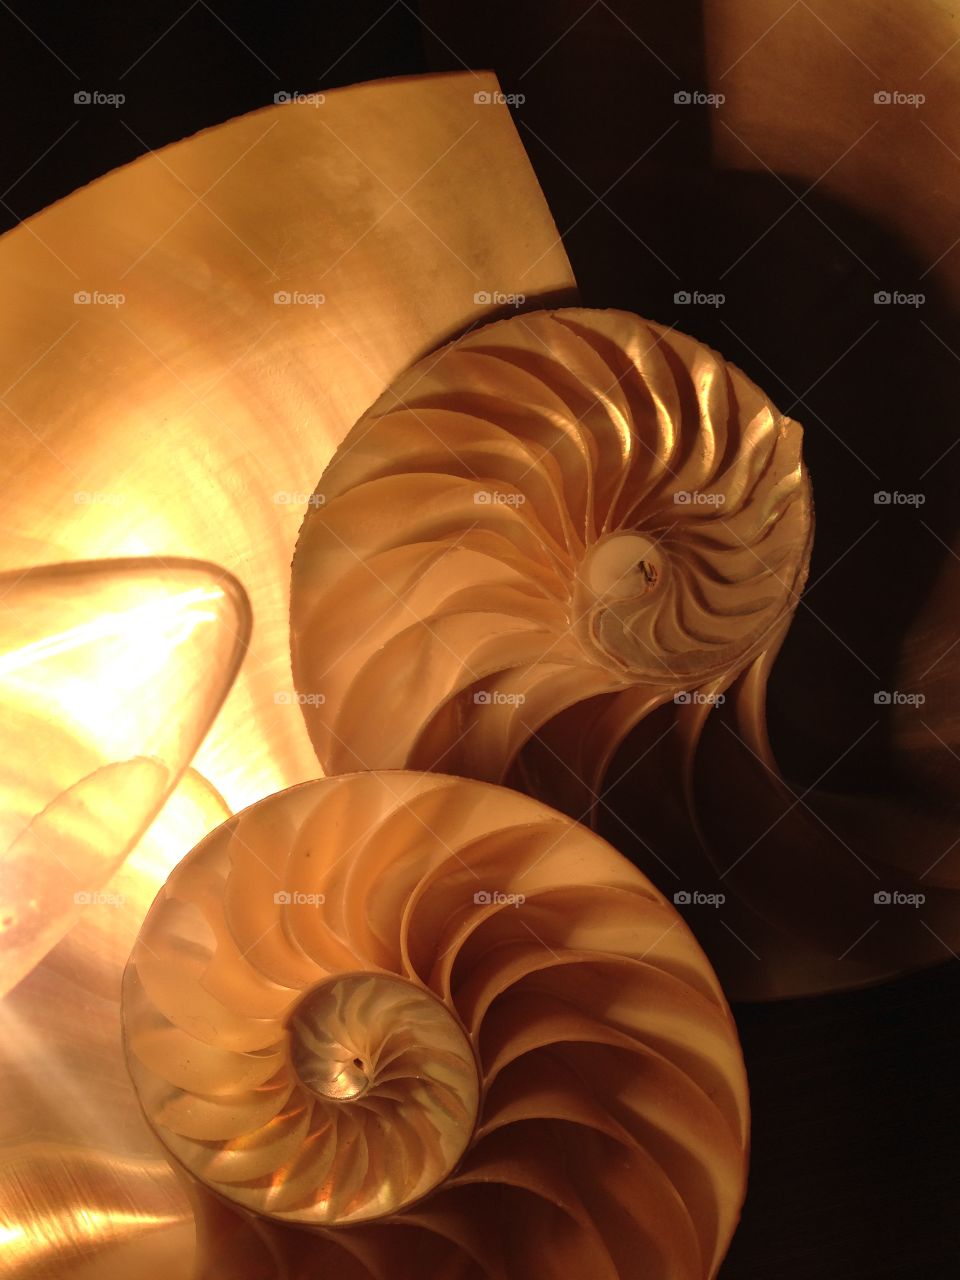 Nautilus shell cross section spiral symmetry pompilius Fibonacci sequence seashell snail mollusk 